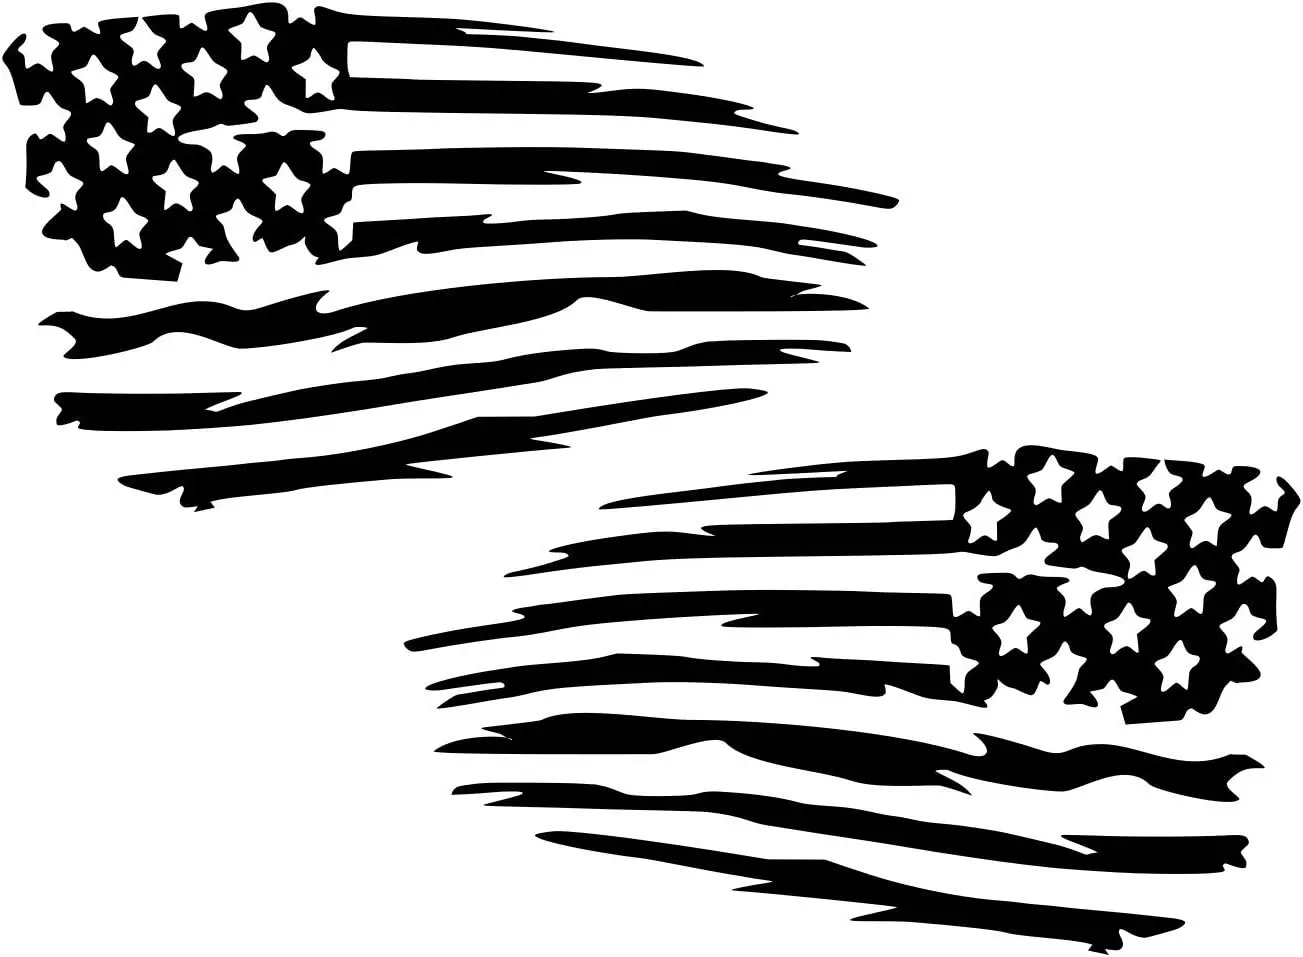 

UR Impressions Blk Mirrored Tattered American Flag 2-Pack Decal Vinyl Sticker Graphics for Cars Trucks SUV Vans Walls Windows